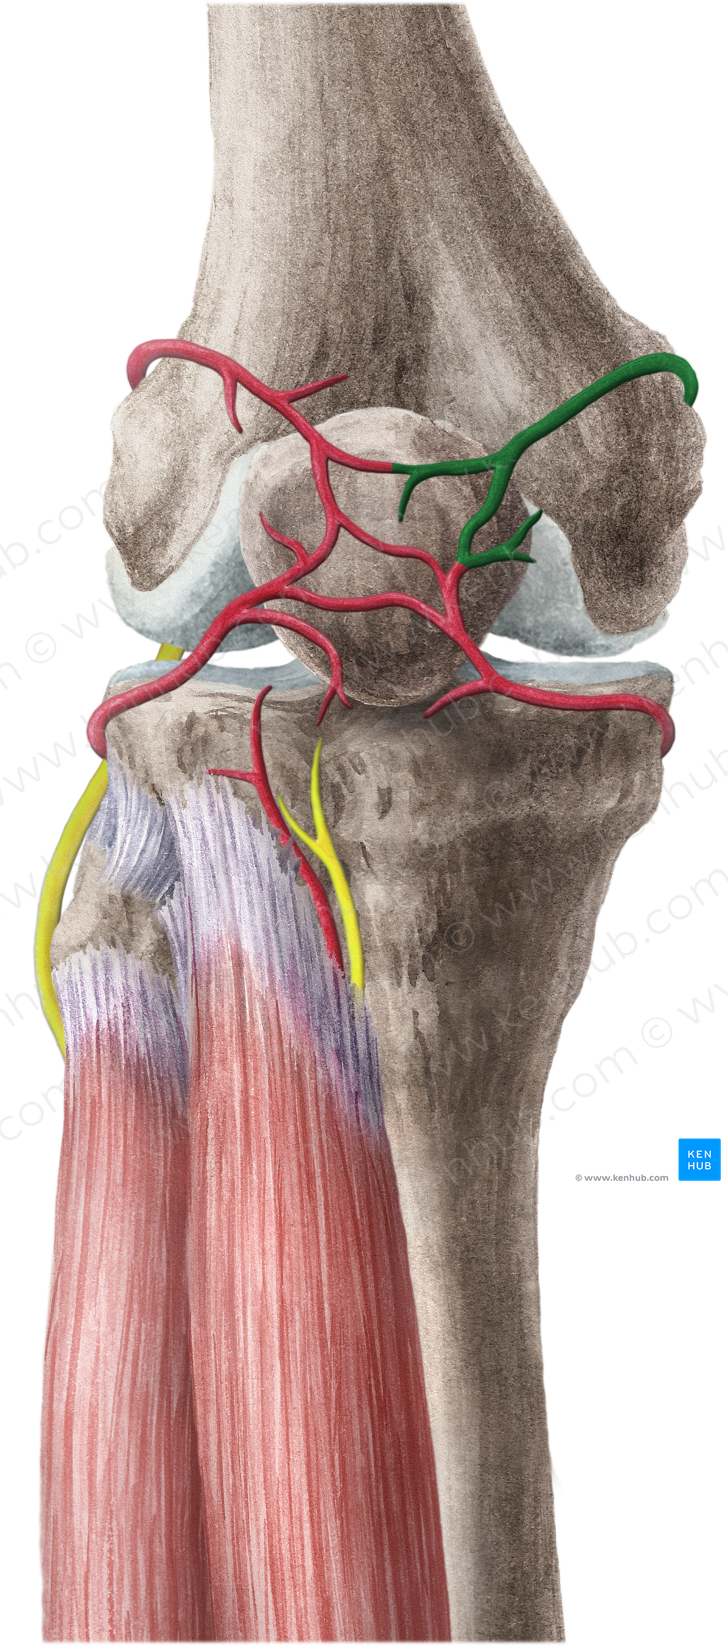 Superior medial genicular artery (#1857)